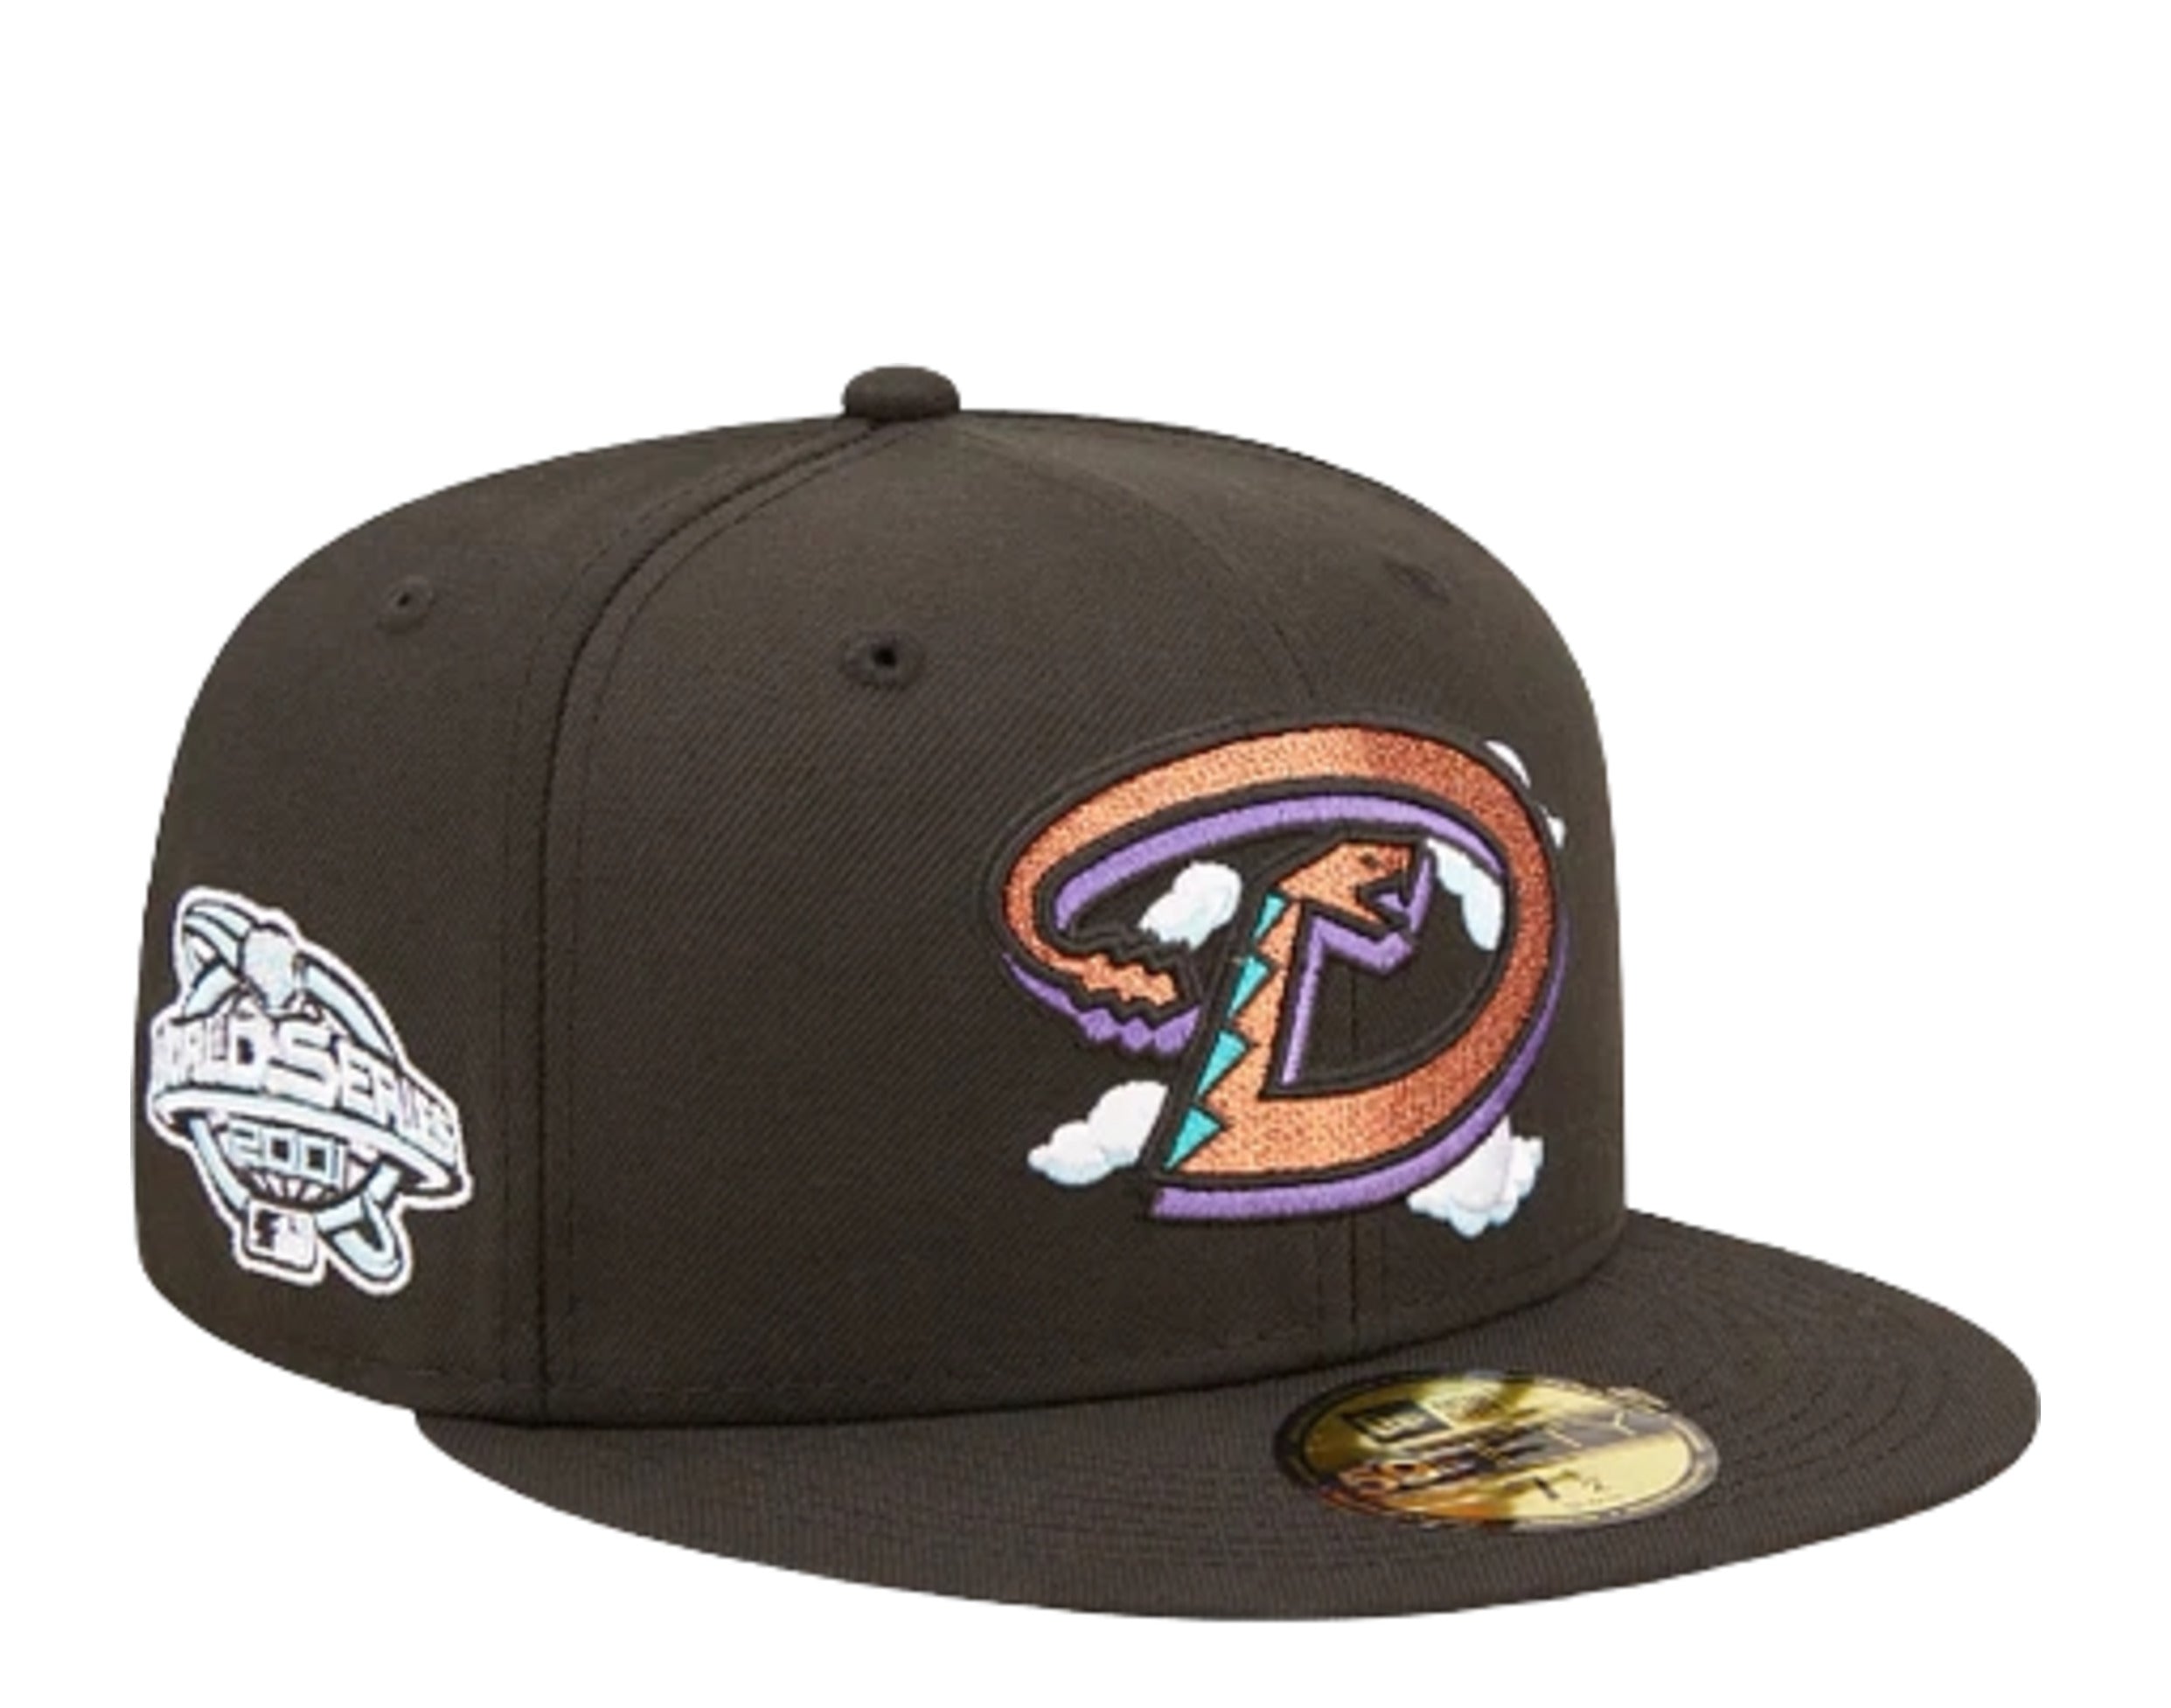 New Era 59FIFTY Arizona Diamondbacks Retro City Original Official Team Colors Fitted Hat